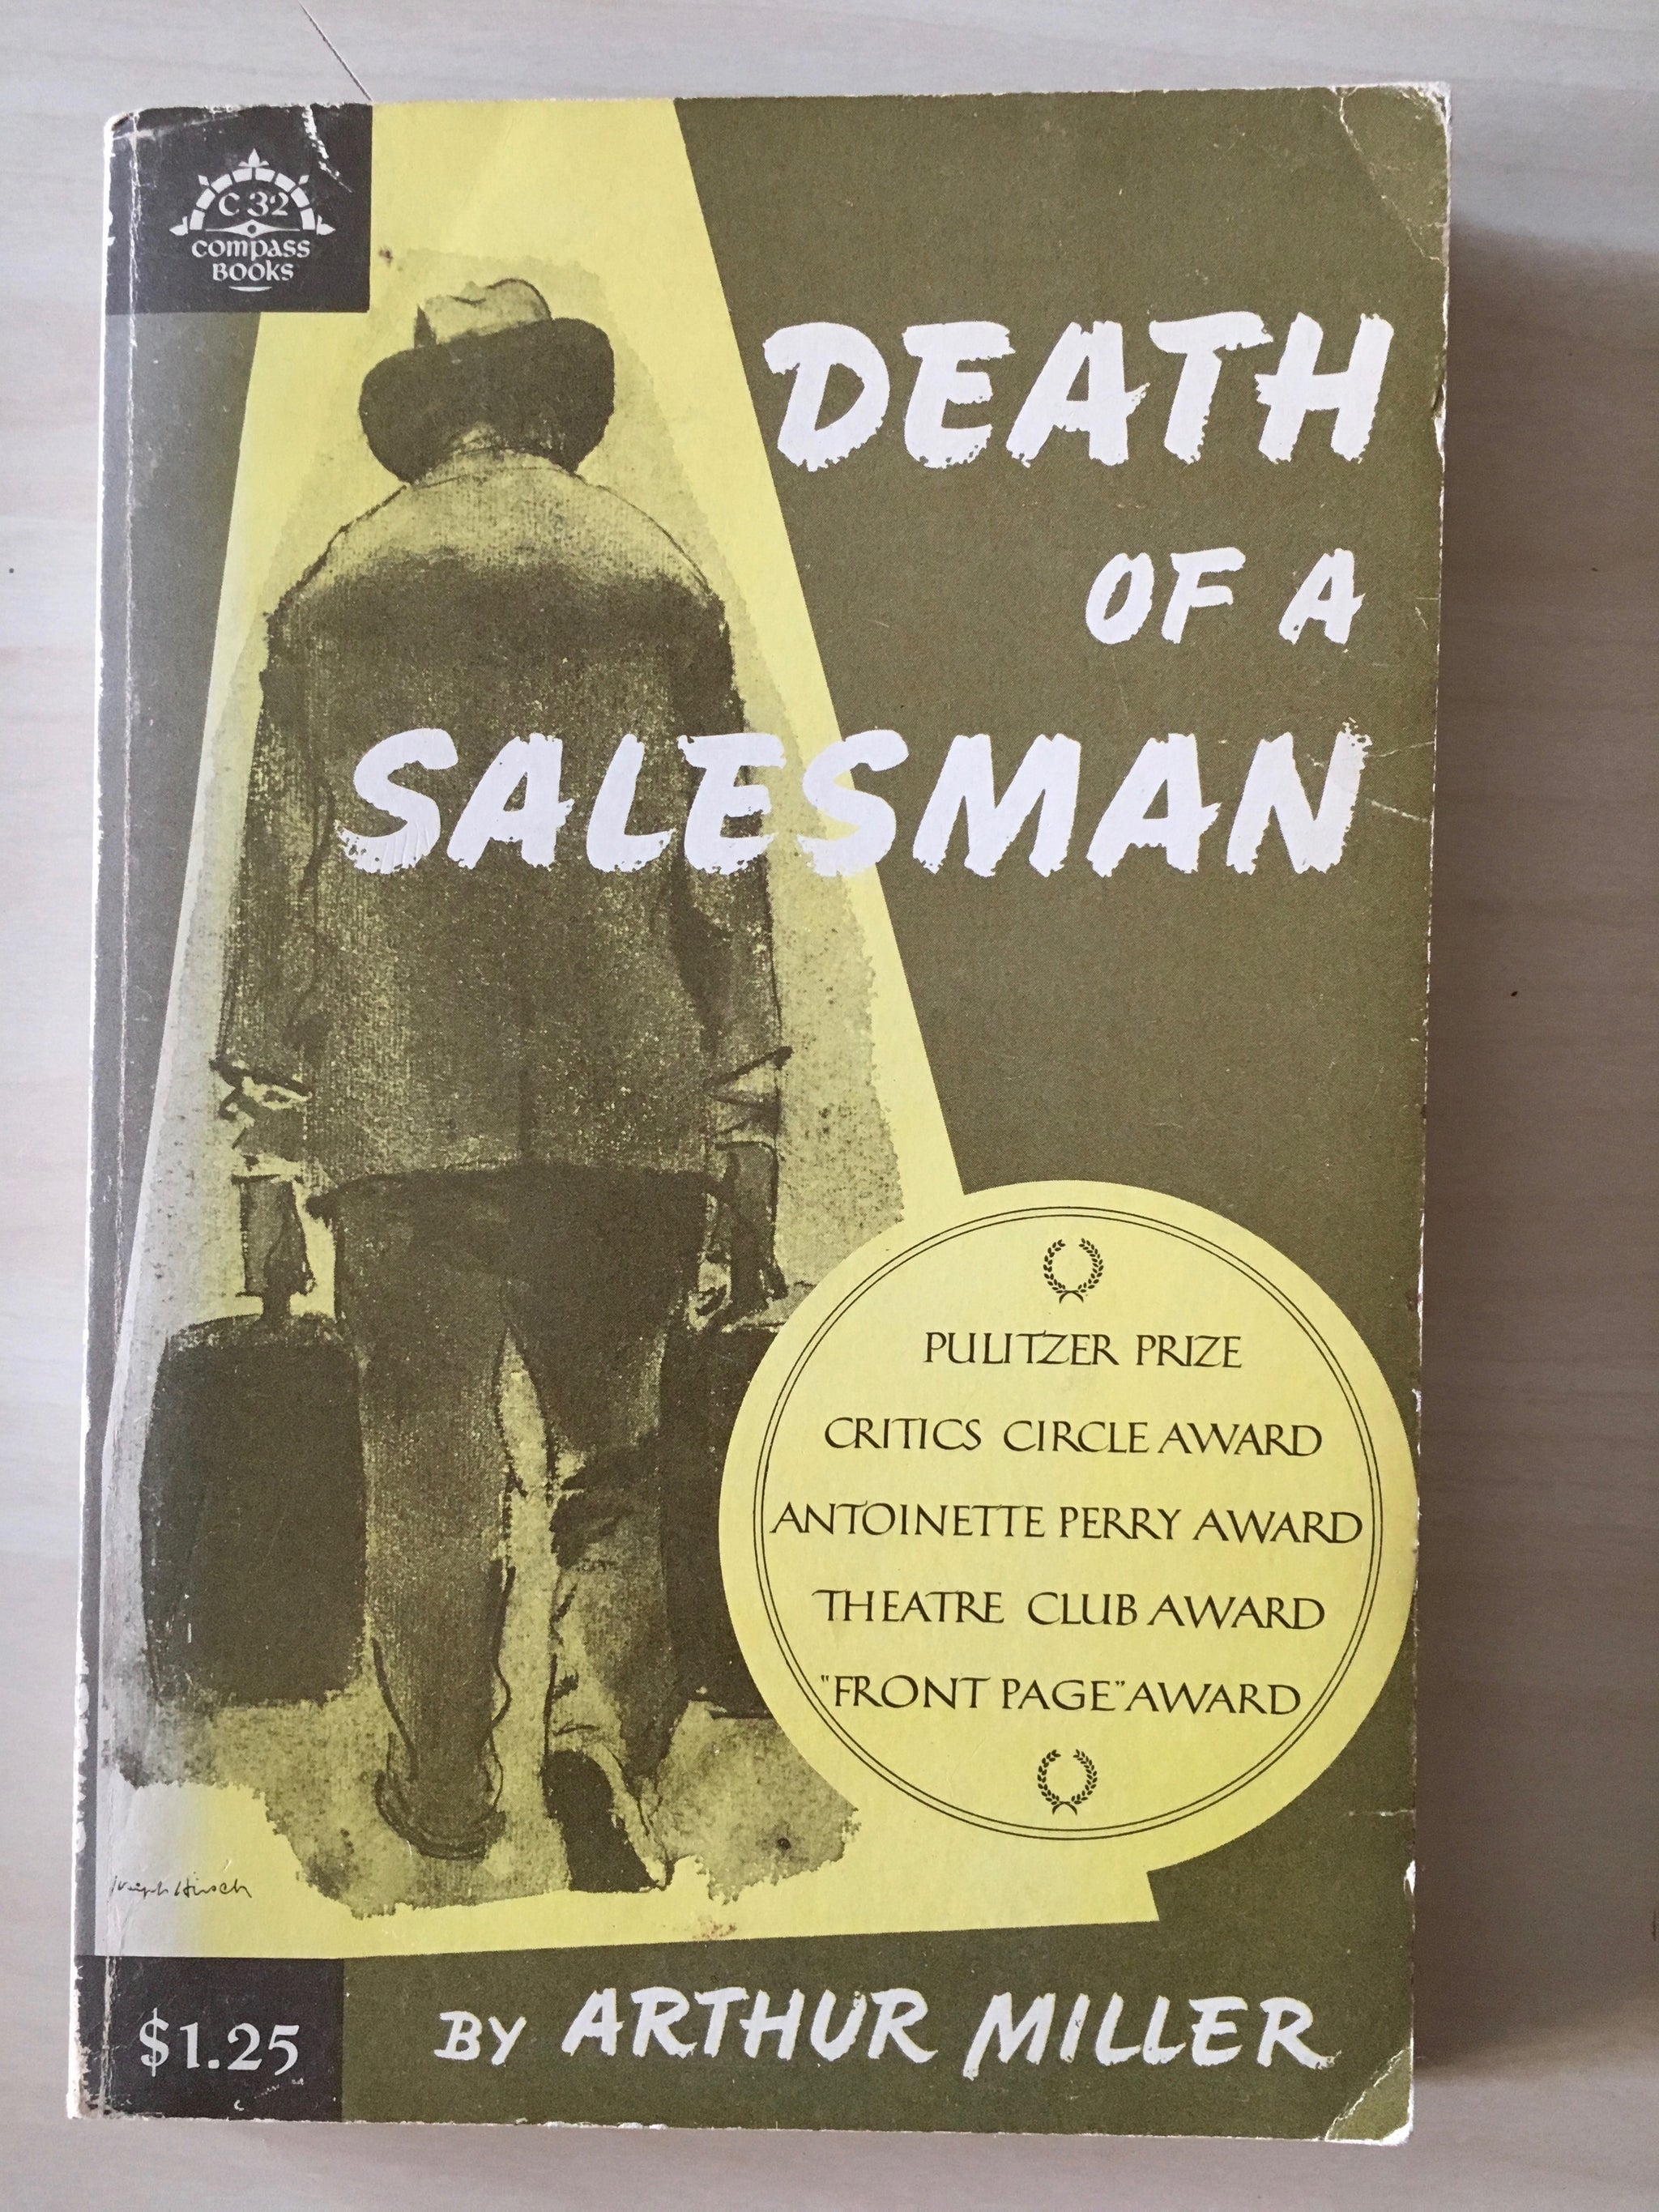 plot in death of a salesman